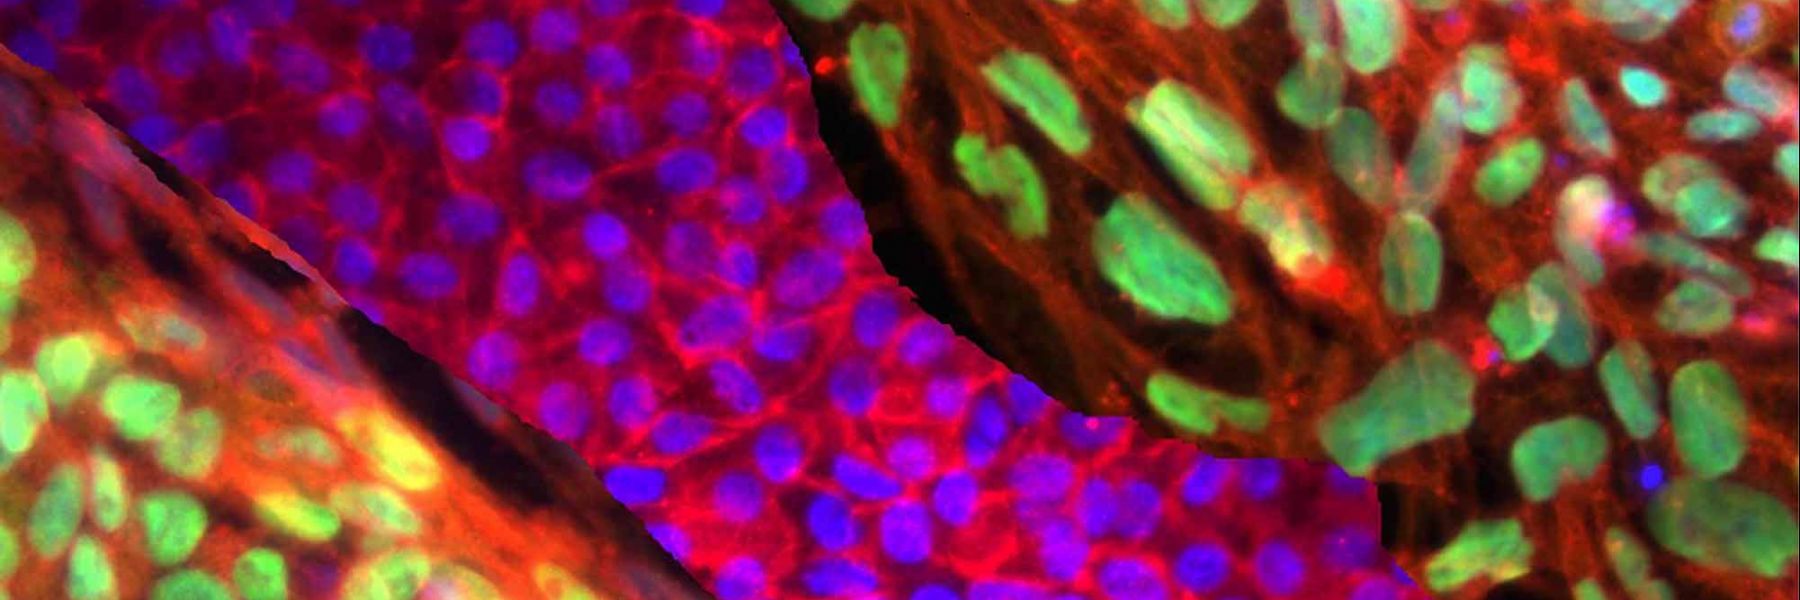 Stem cells. Credit: Teisha Rowland & Clegg Lab